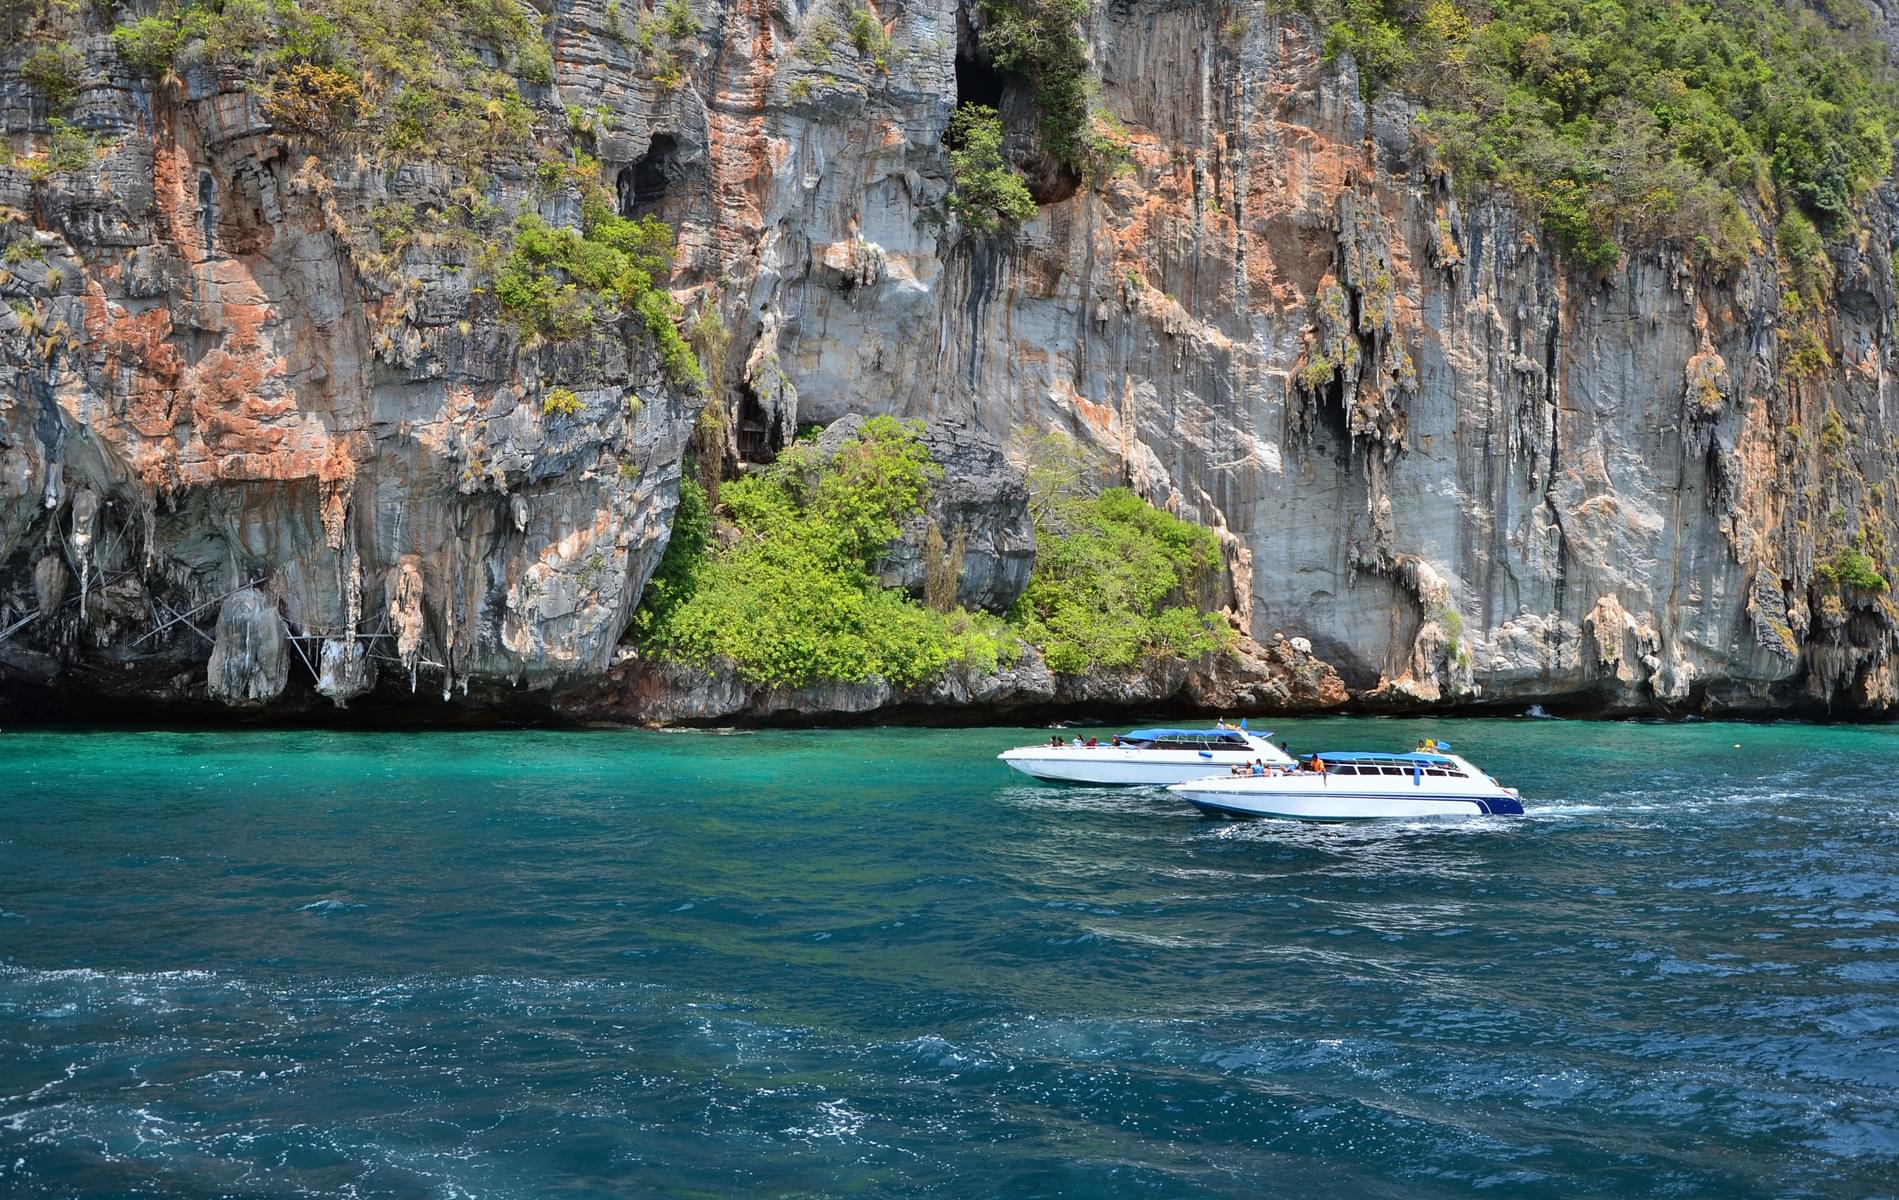 James Bond Island Day Tour from Phuket